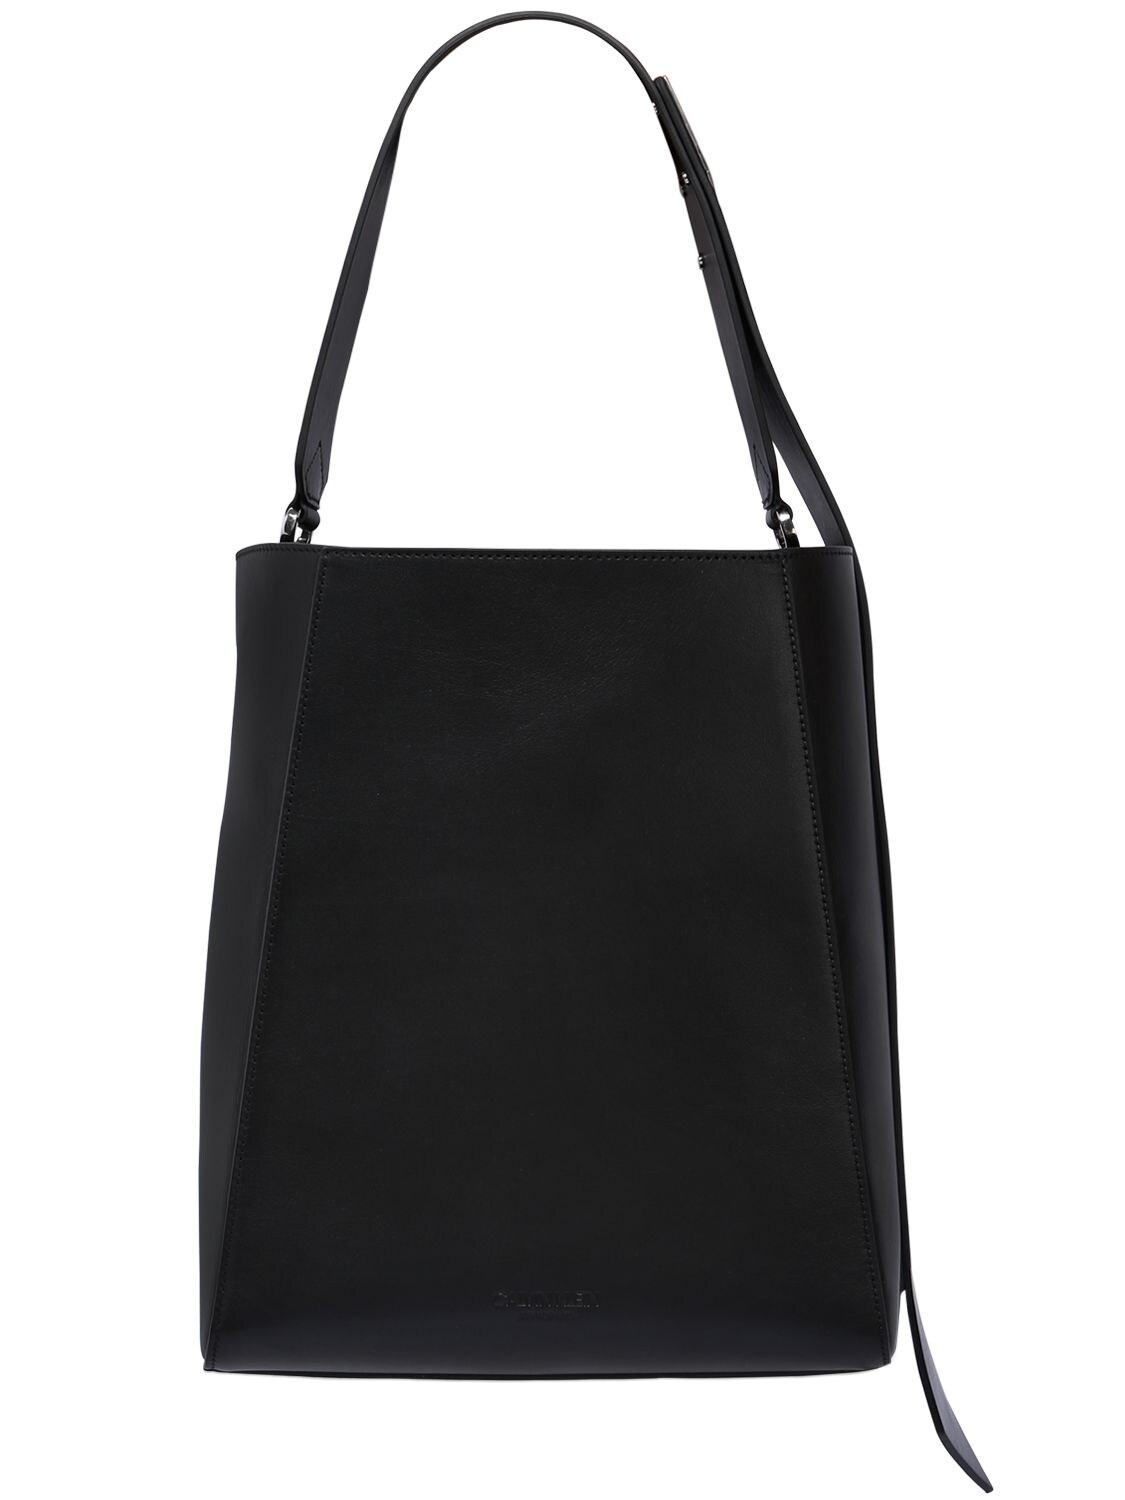 Calvin Klein 205w39nyc Leather Hobo Shoulder Bag In Black